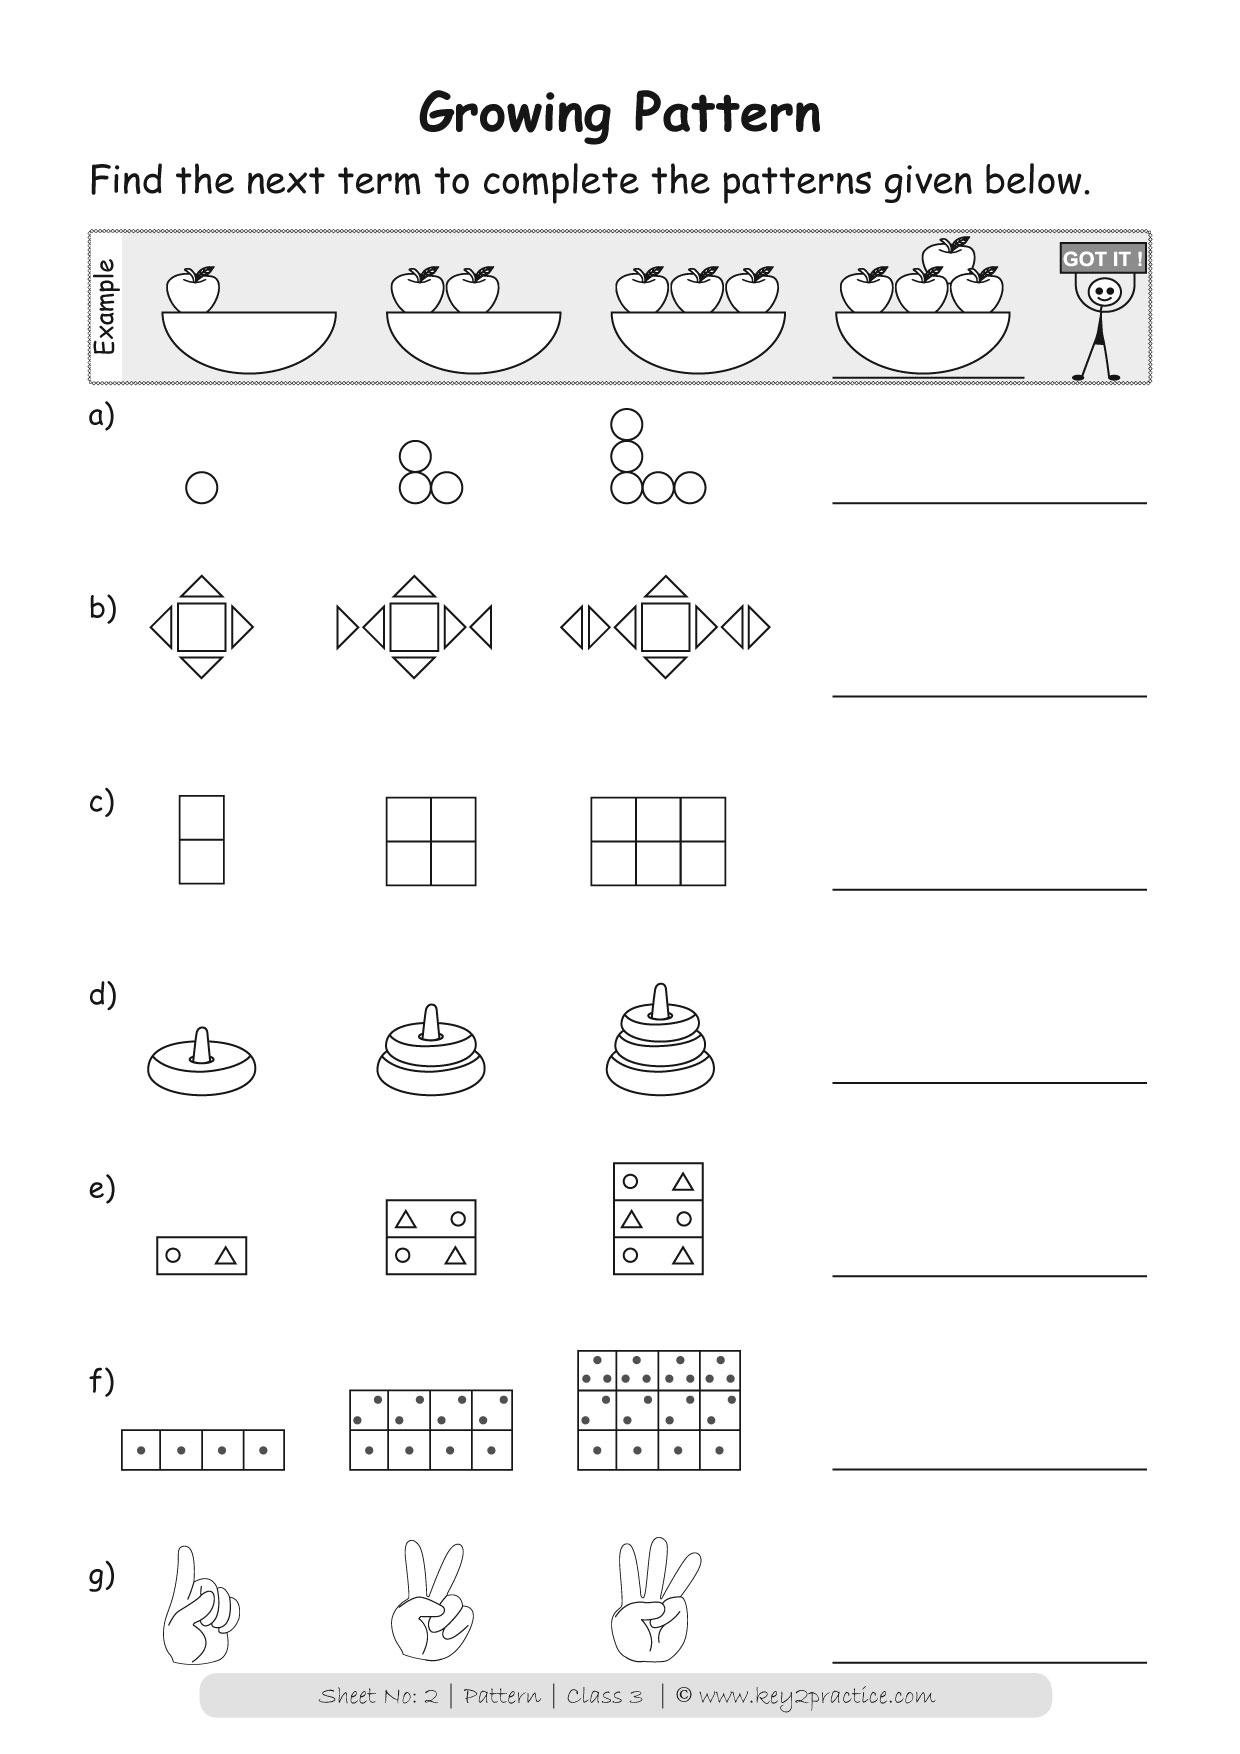 maths-worksheets-grade-3-patterns-key2practice-workbooks